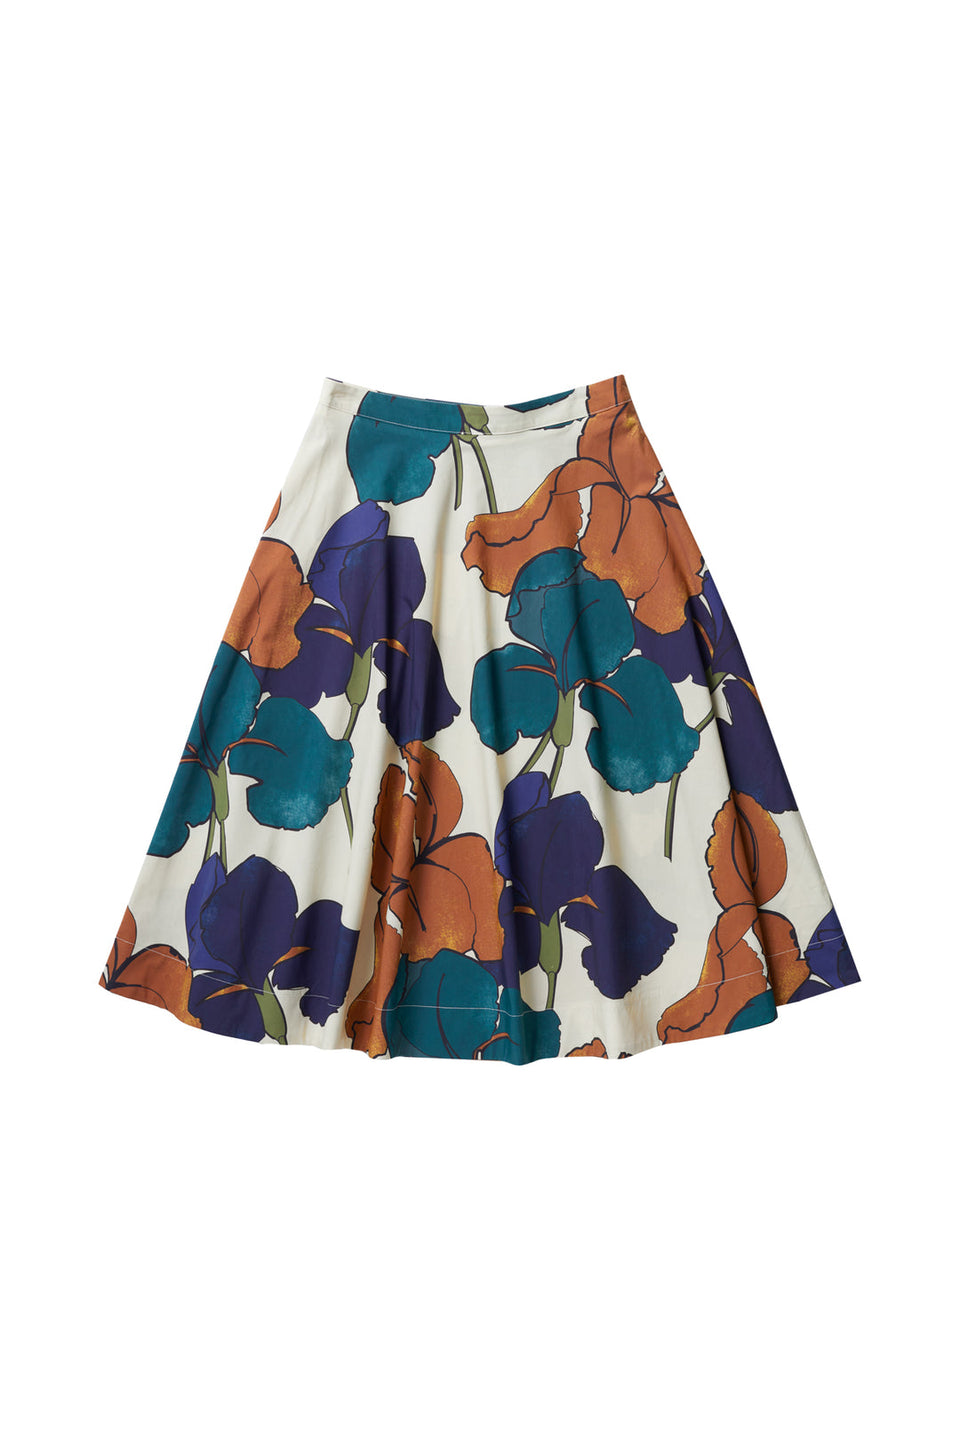 Zaikamoya Knee Length Blue/Green/Brown Flowers Circle Skirt